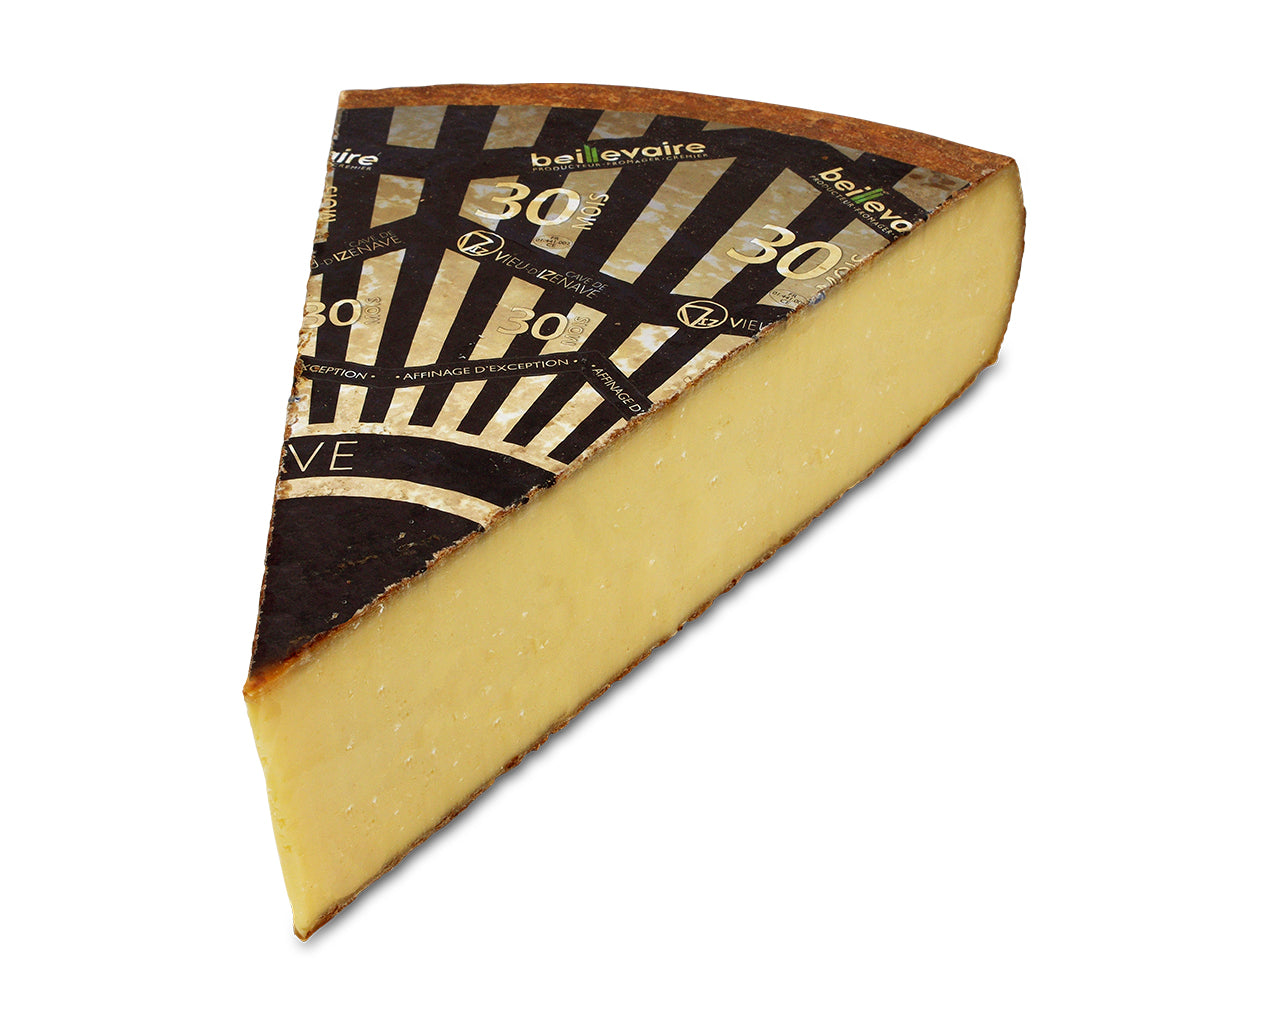 Soft Heart-Shaped Cheeses : Coeur de Neufchâtel-En-Bray